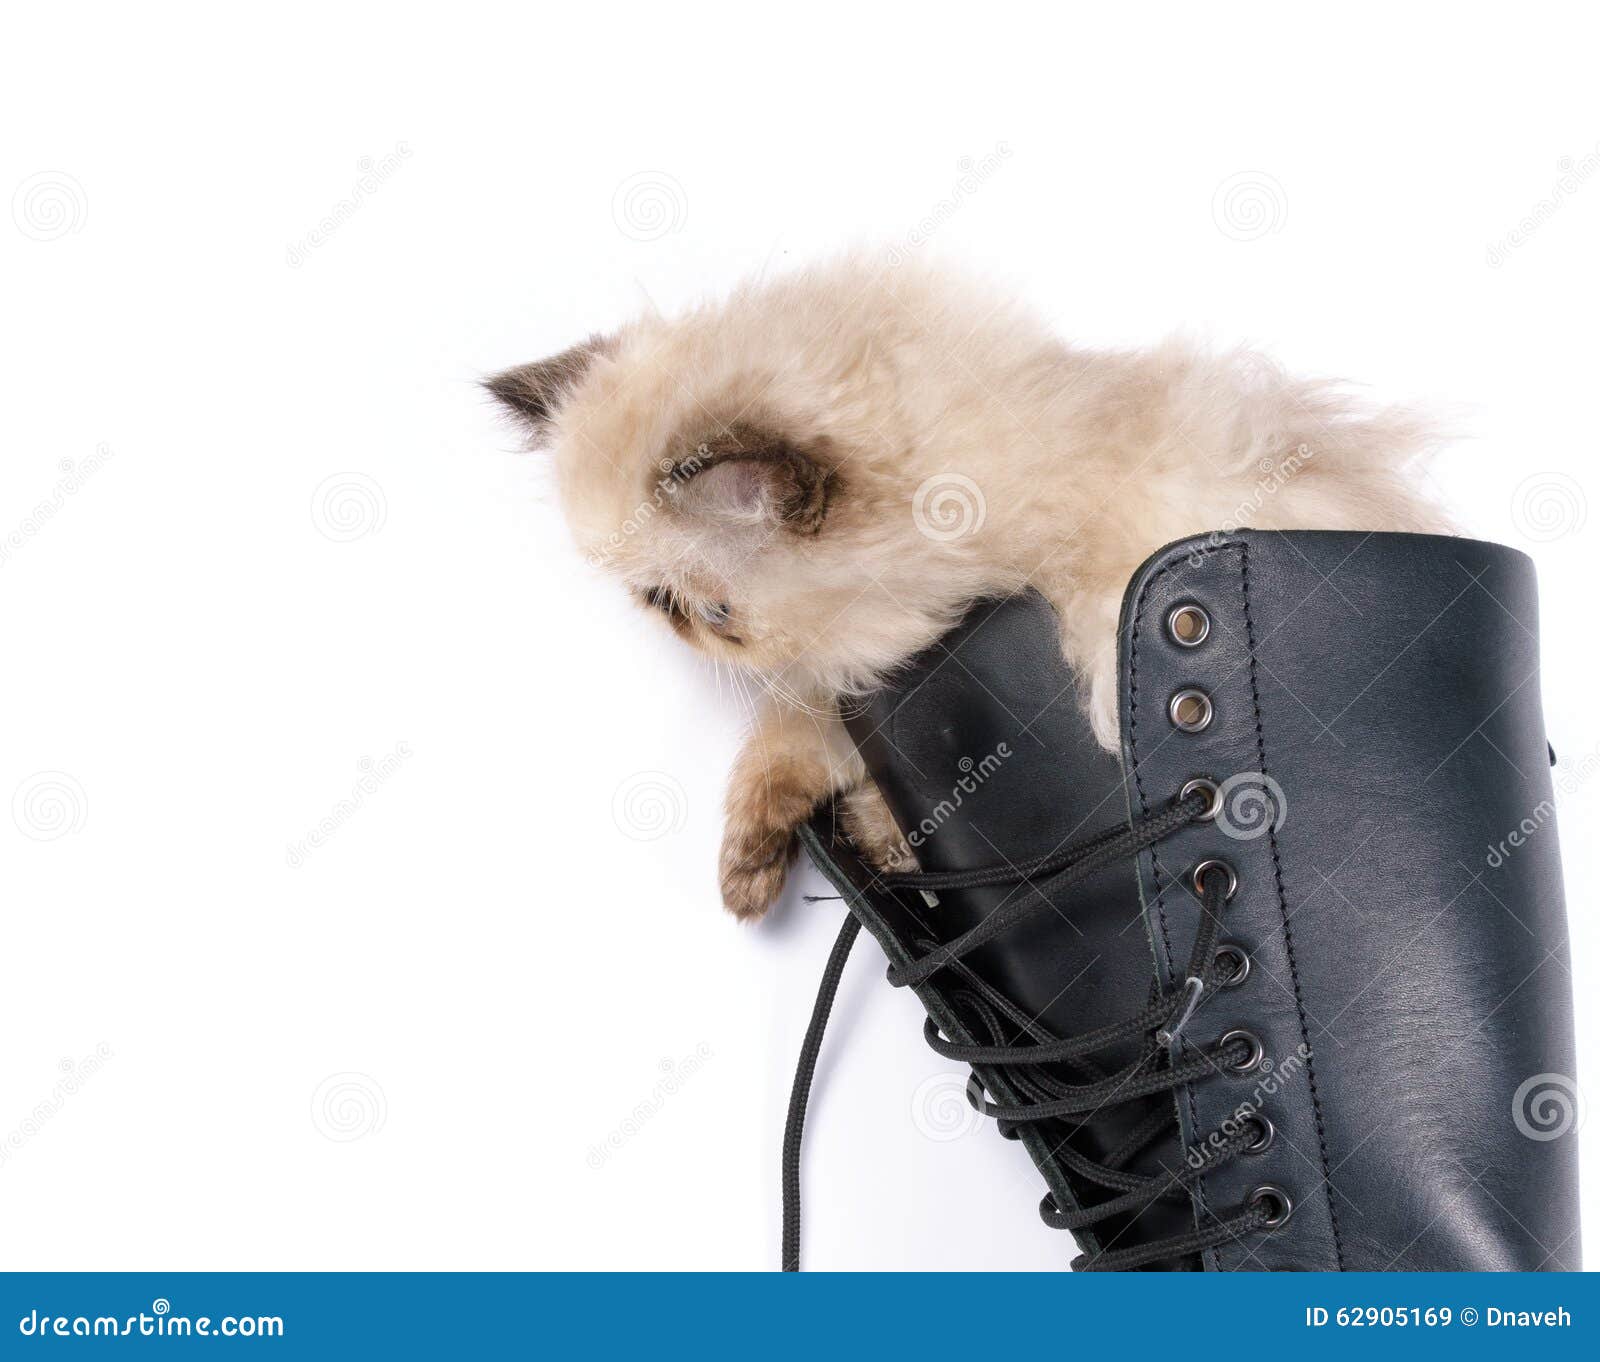 Cat in Boots - Himalauan Cat in Combat Boot Stock Image - Image of ...